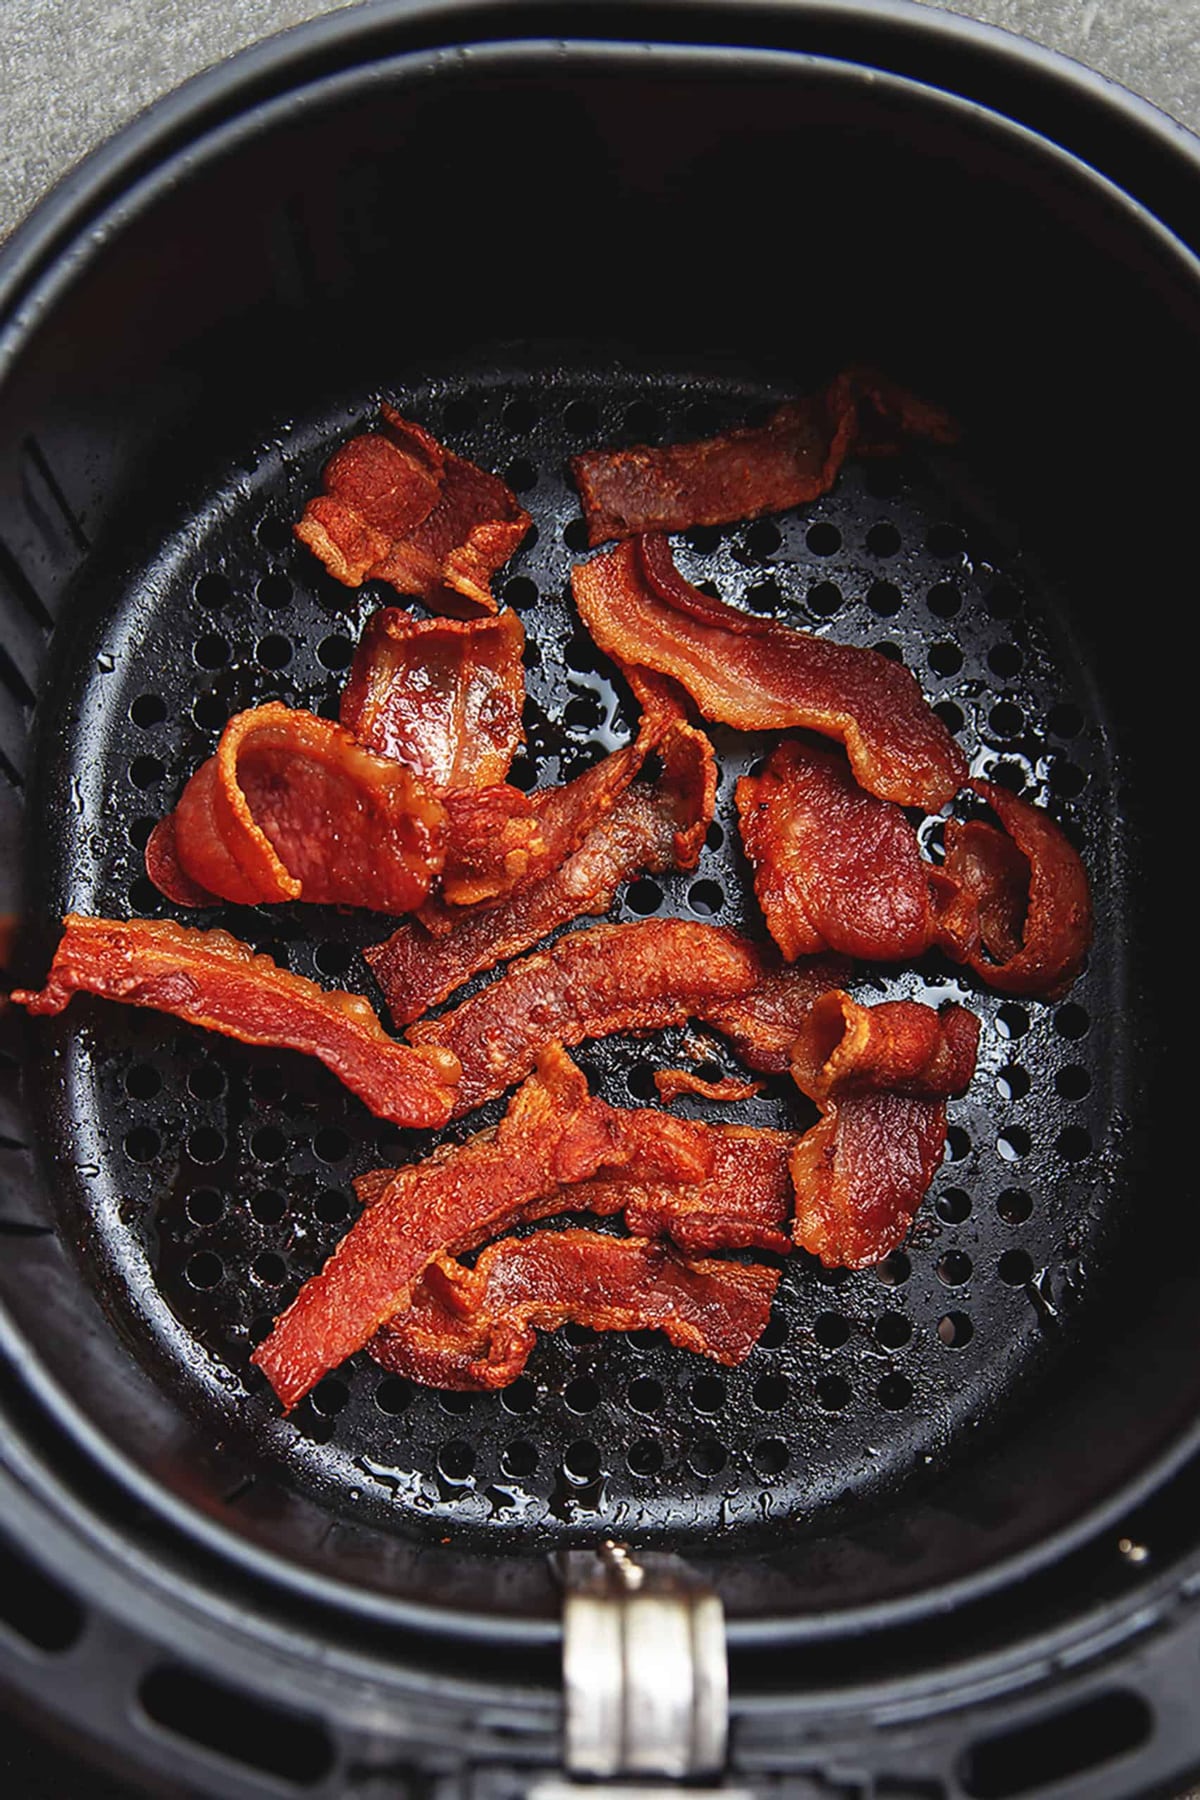 Air fryer bacon-no smoke